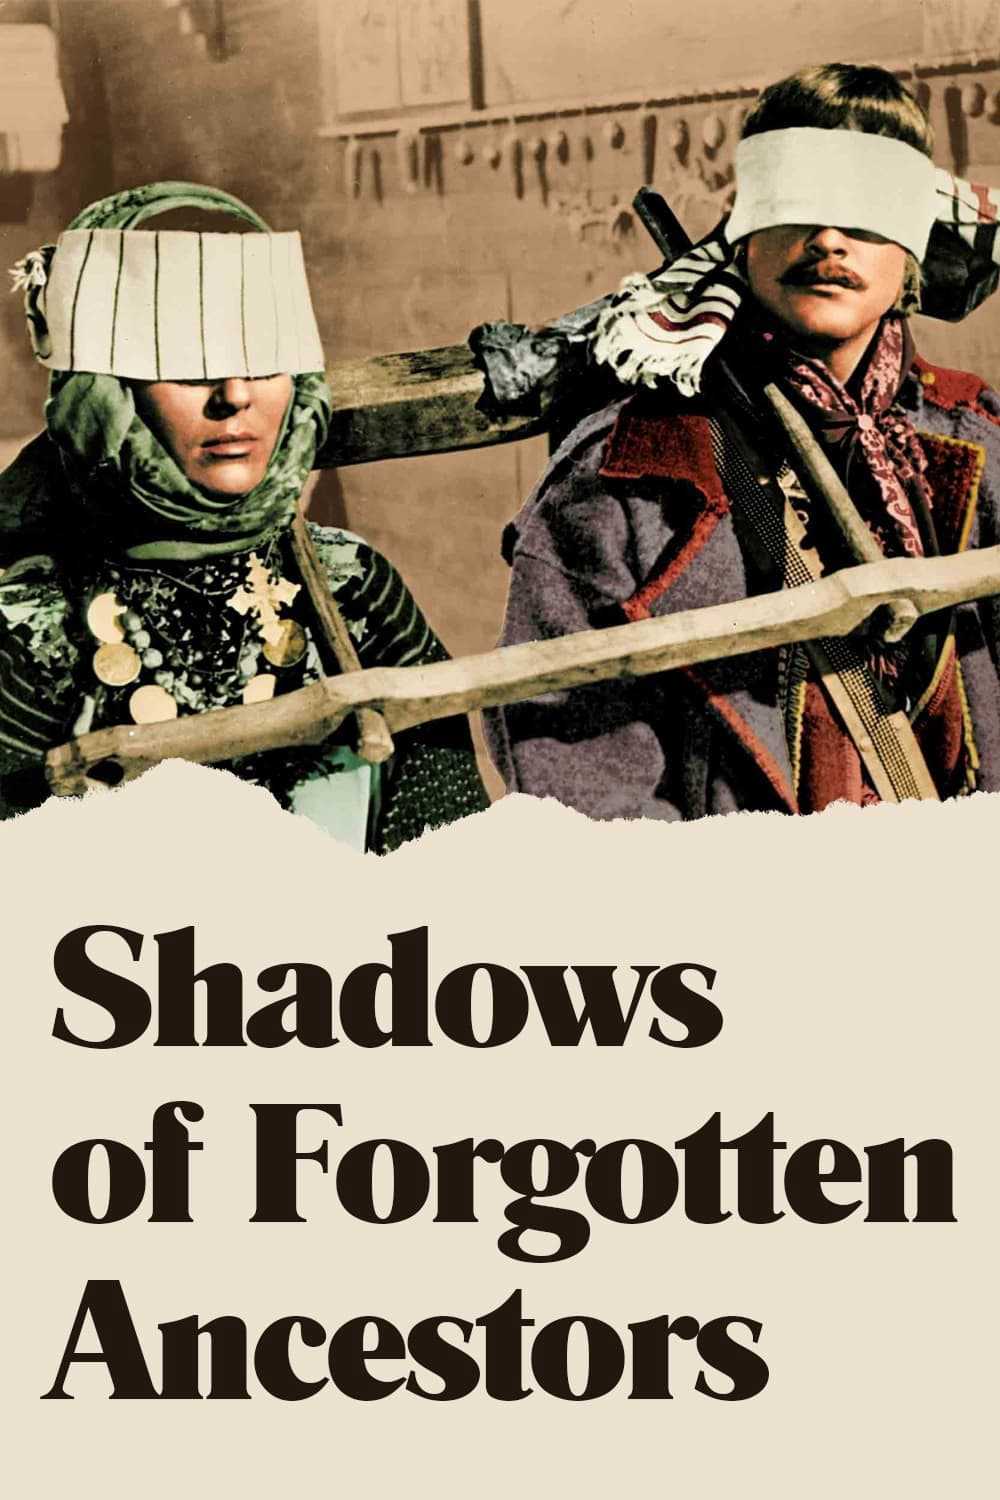 Shadows of forgotten ancestors - Shadows of forgotten ancestors